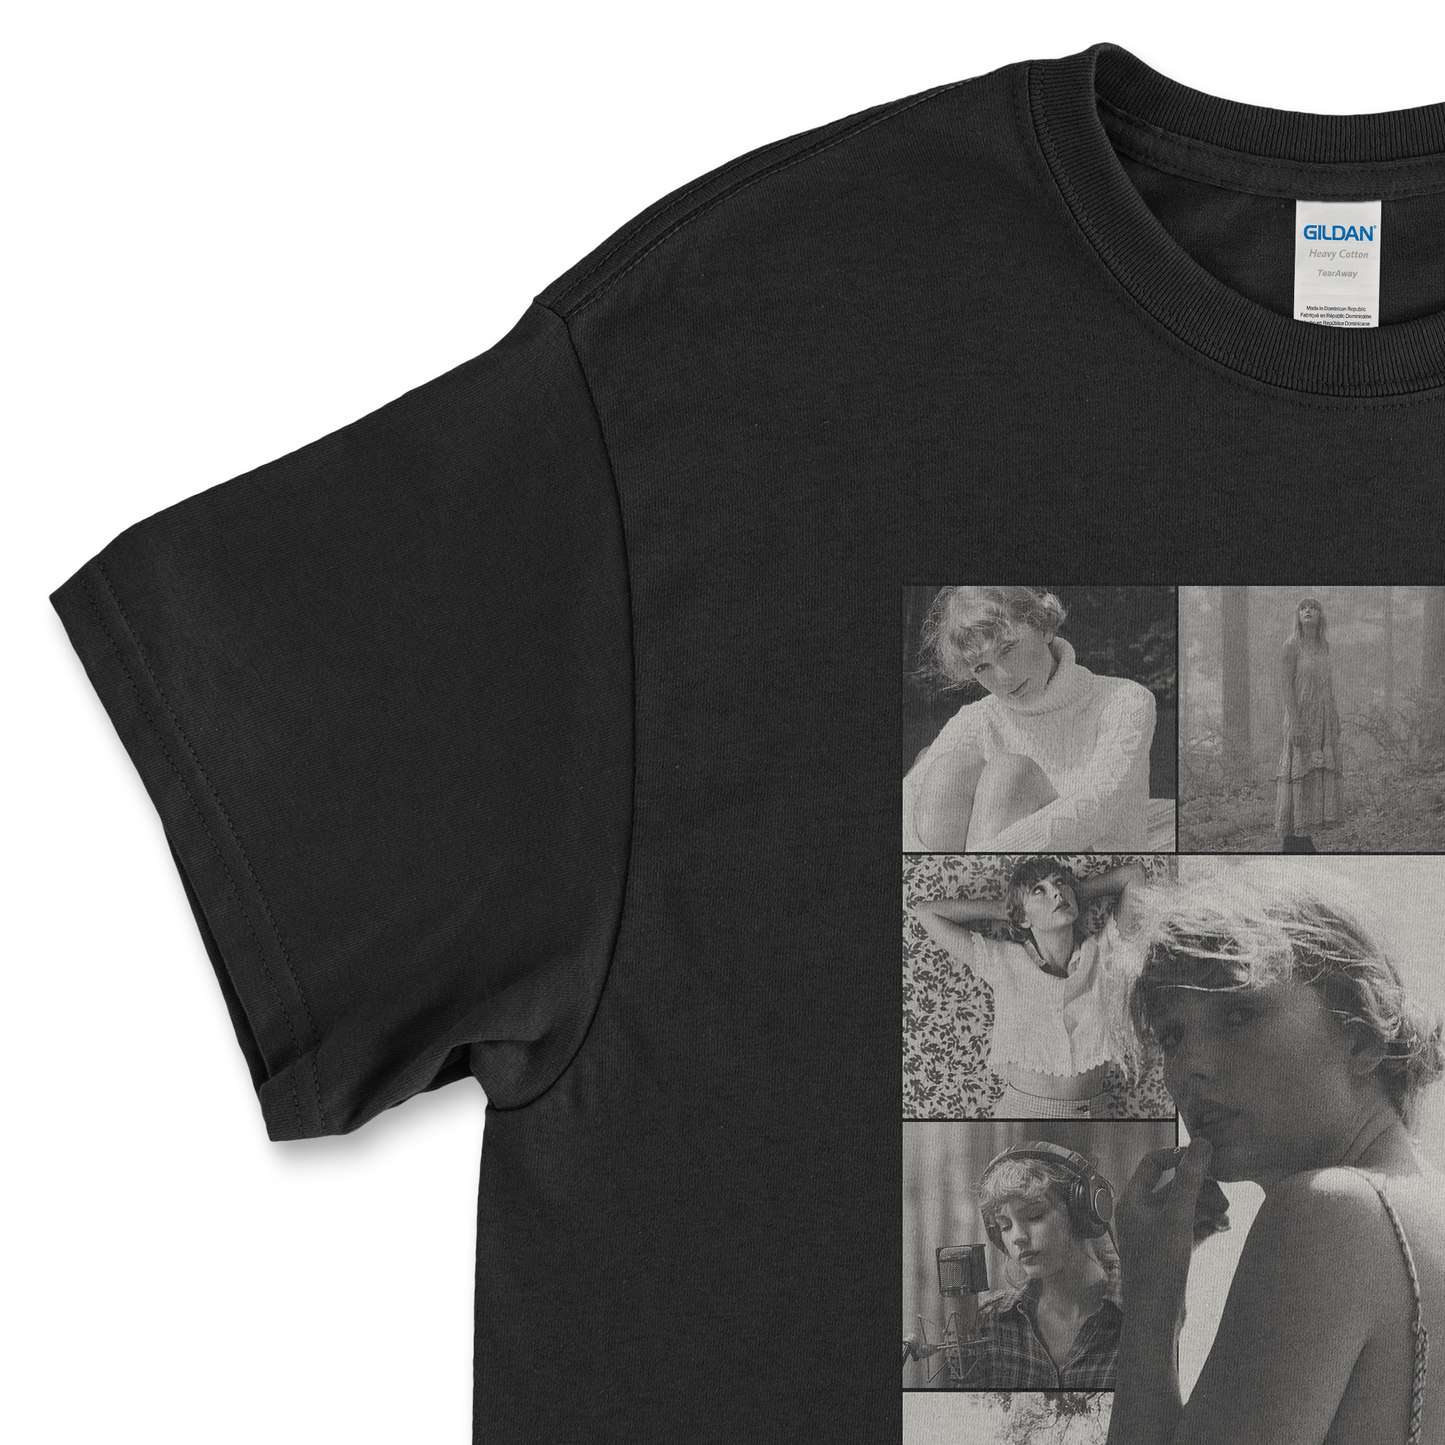 The folklore Era Taylor Swift T-Shirt